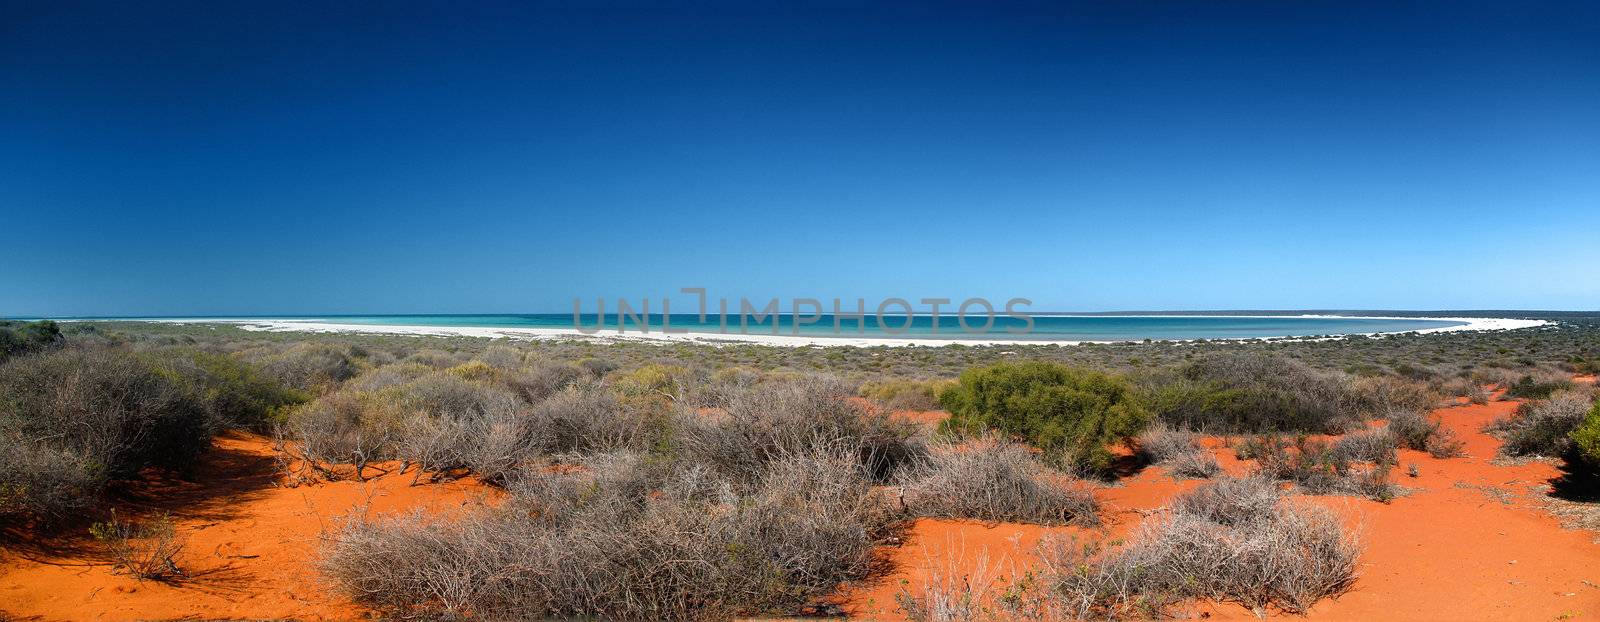 An image of the beautiful Shark Bay in Australia